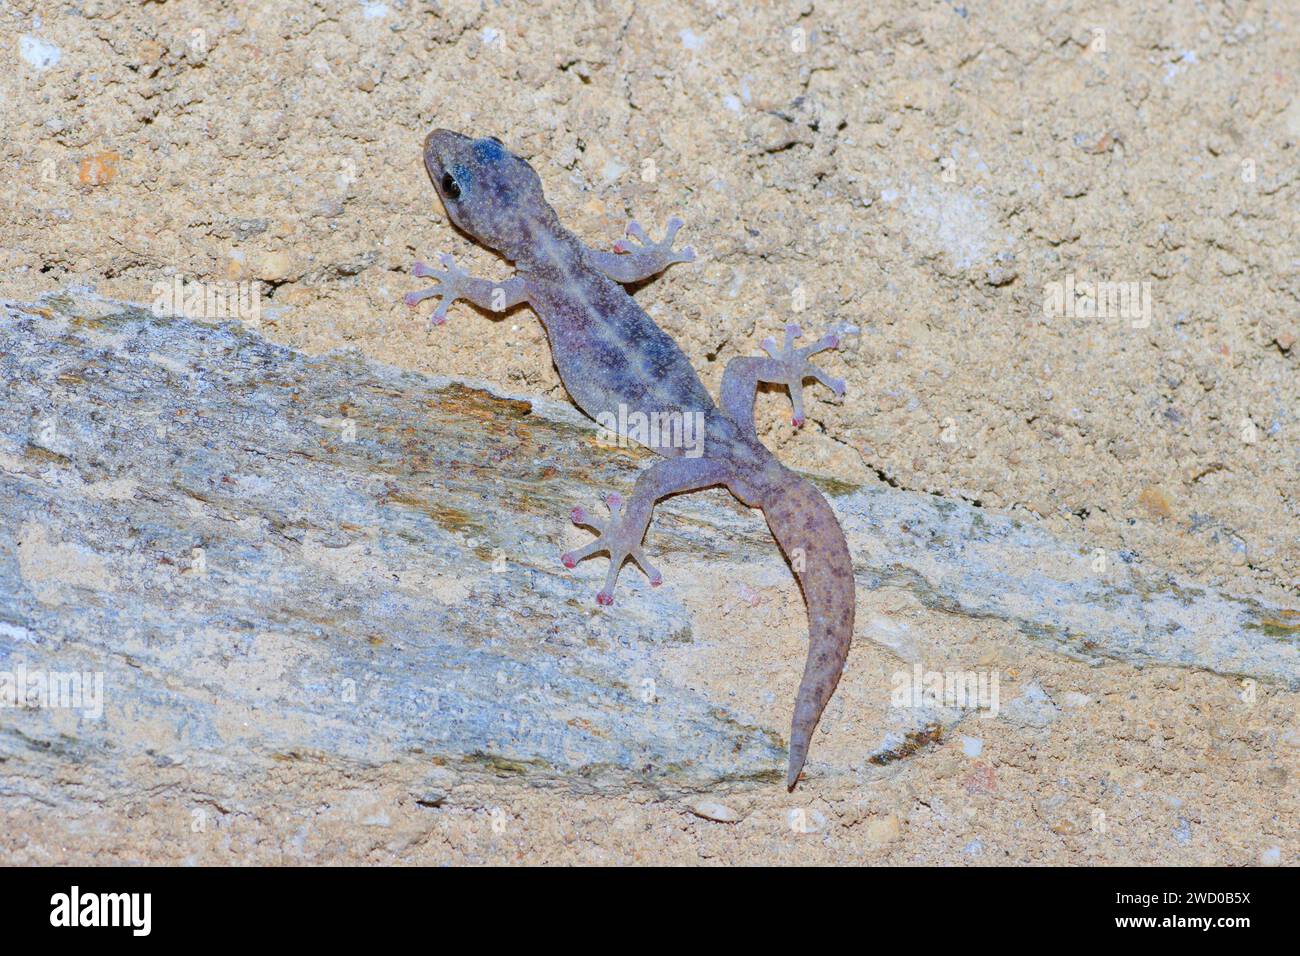 European leaf-toed gecko (Phyllodactylus europaeus, Euleptes europaea), on sandy dry ground, dorsal view, France, Port-Cros Stock Photo